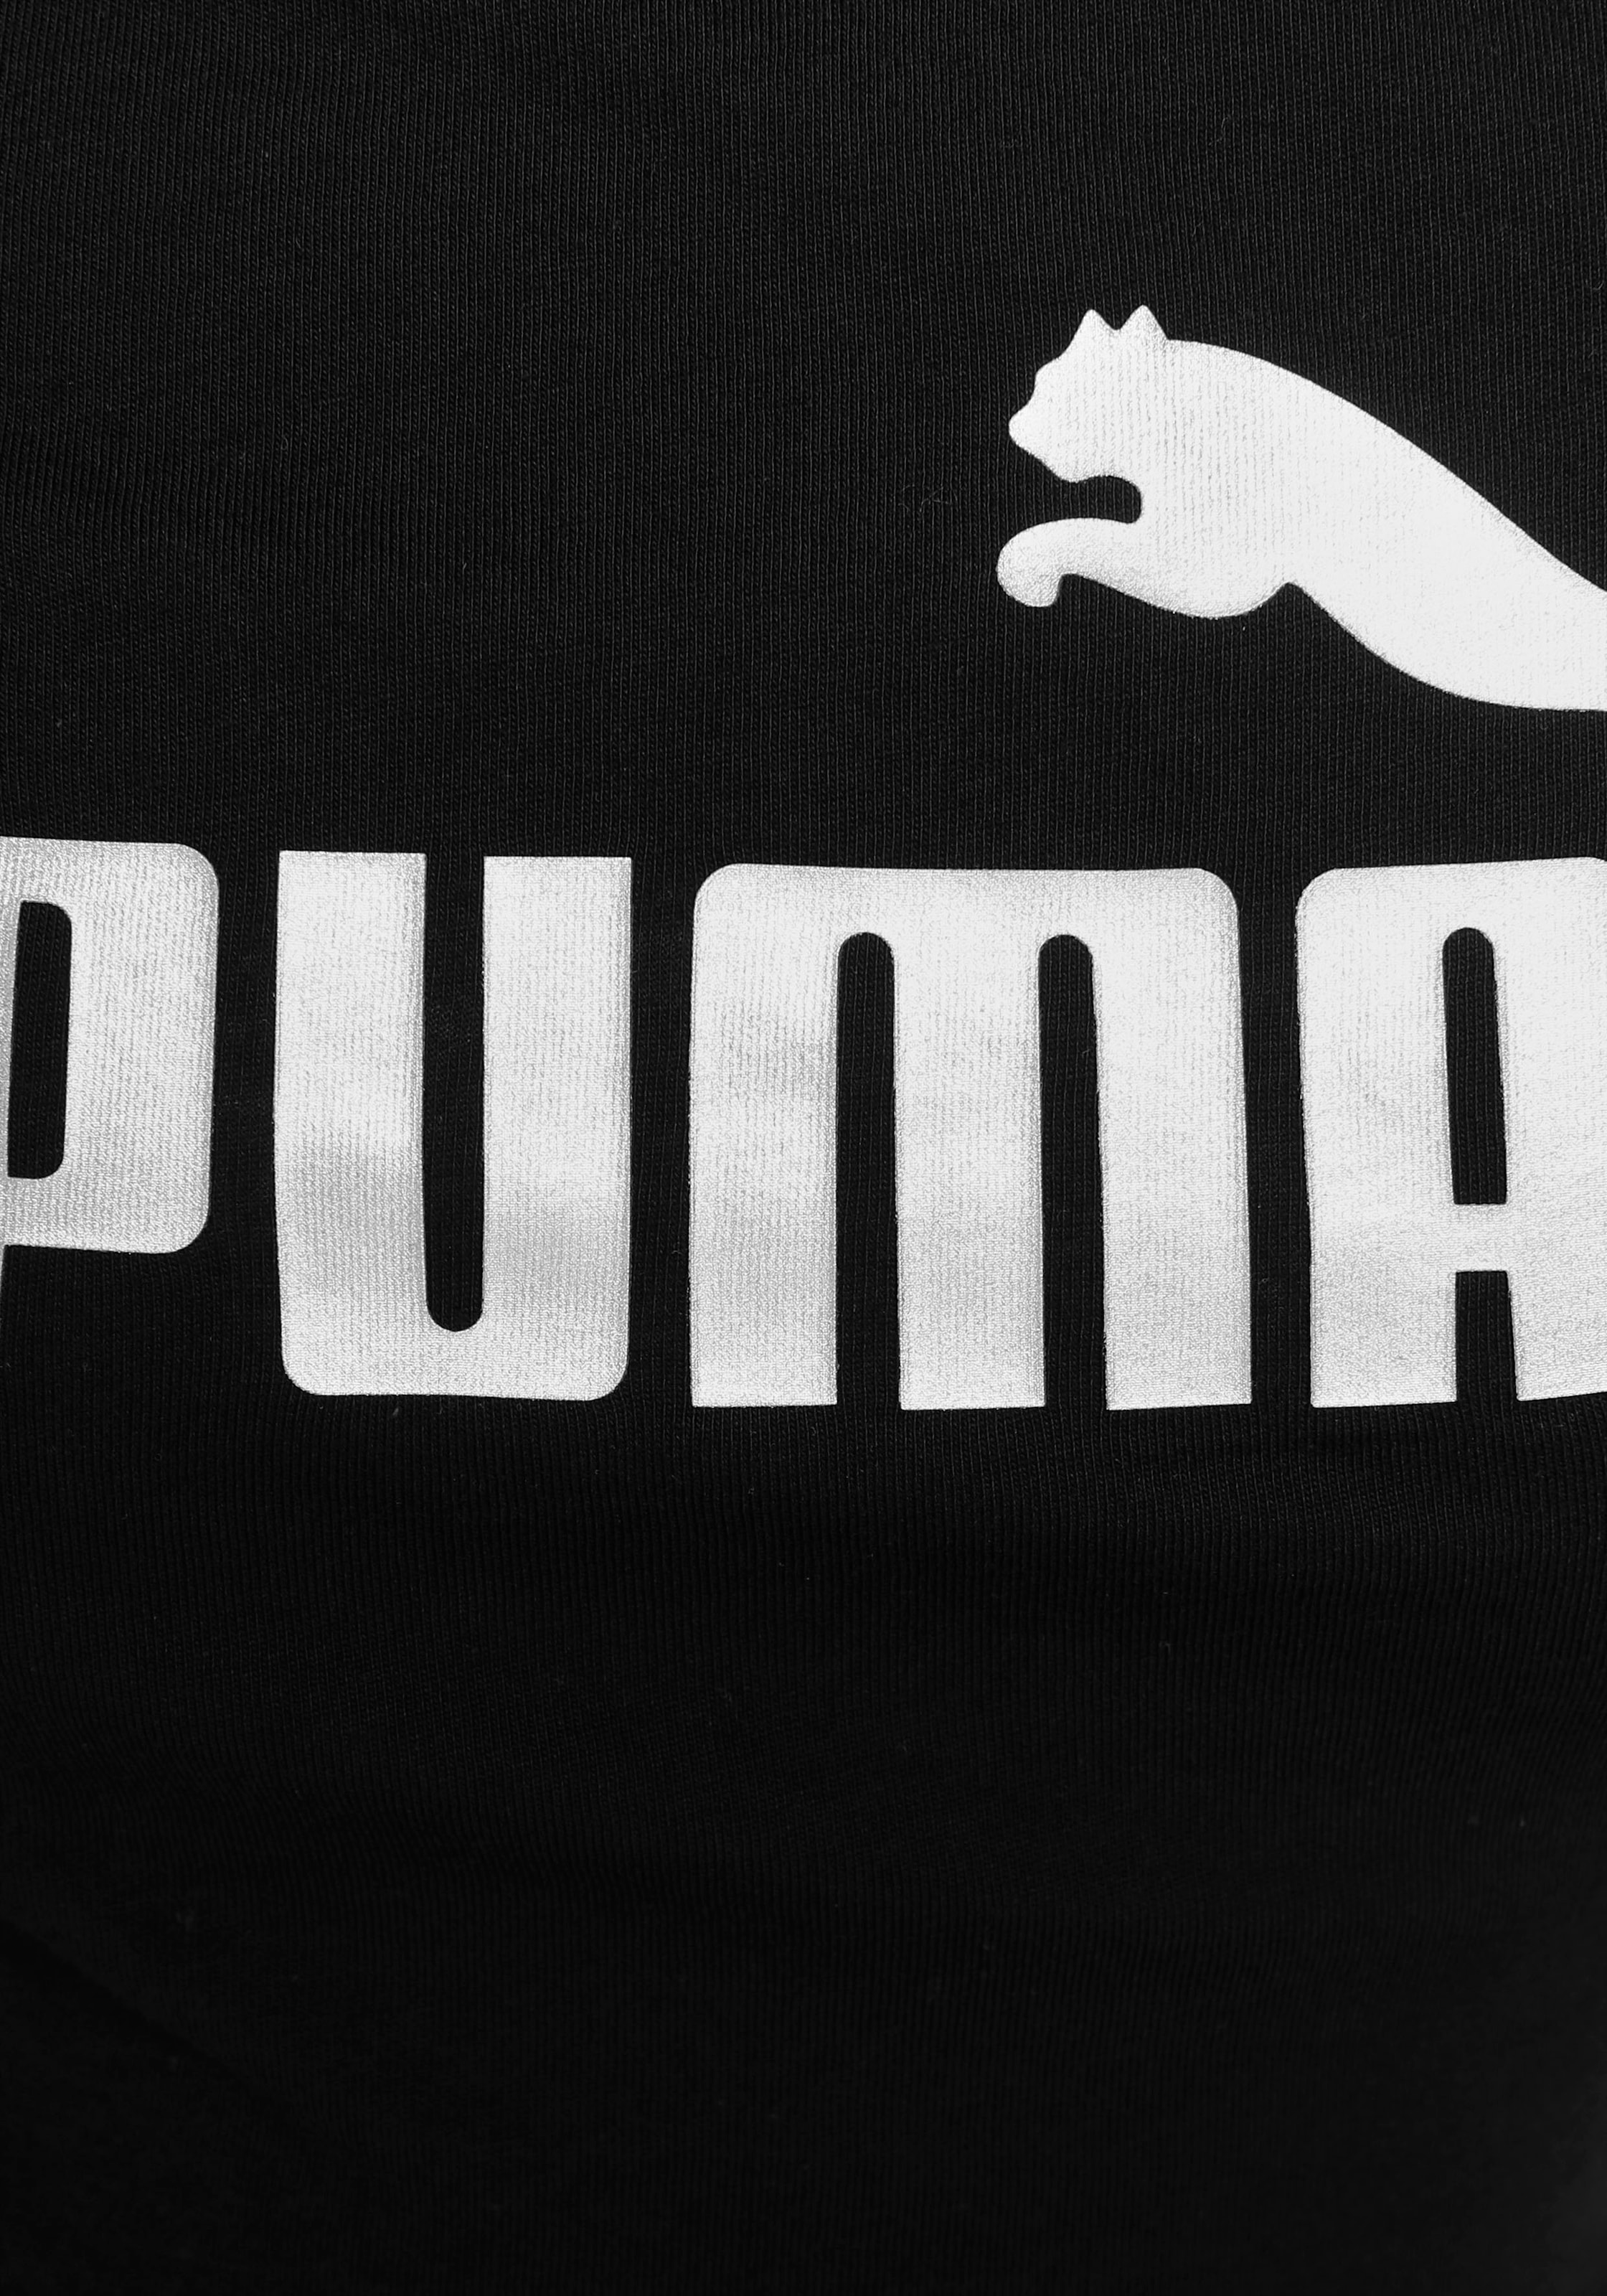 PUMA T-Shirt »ESS+ LOGO TEE G«